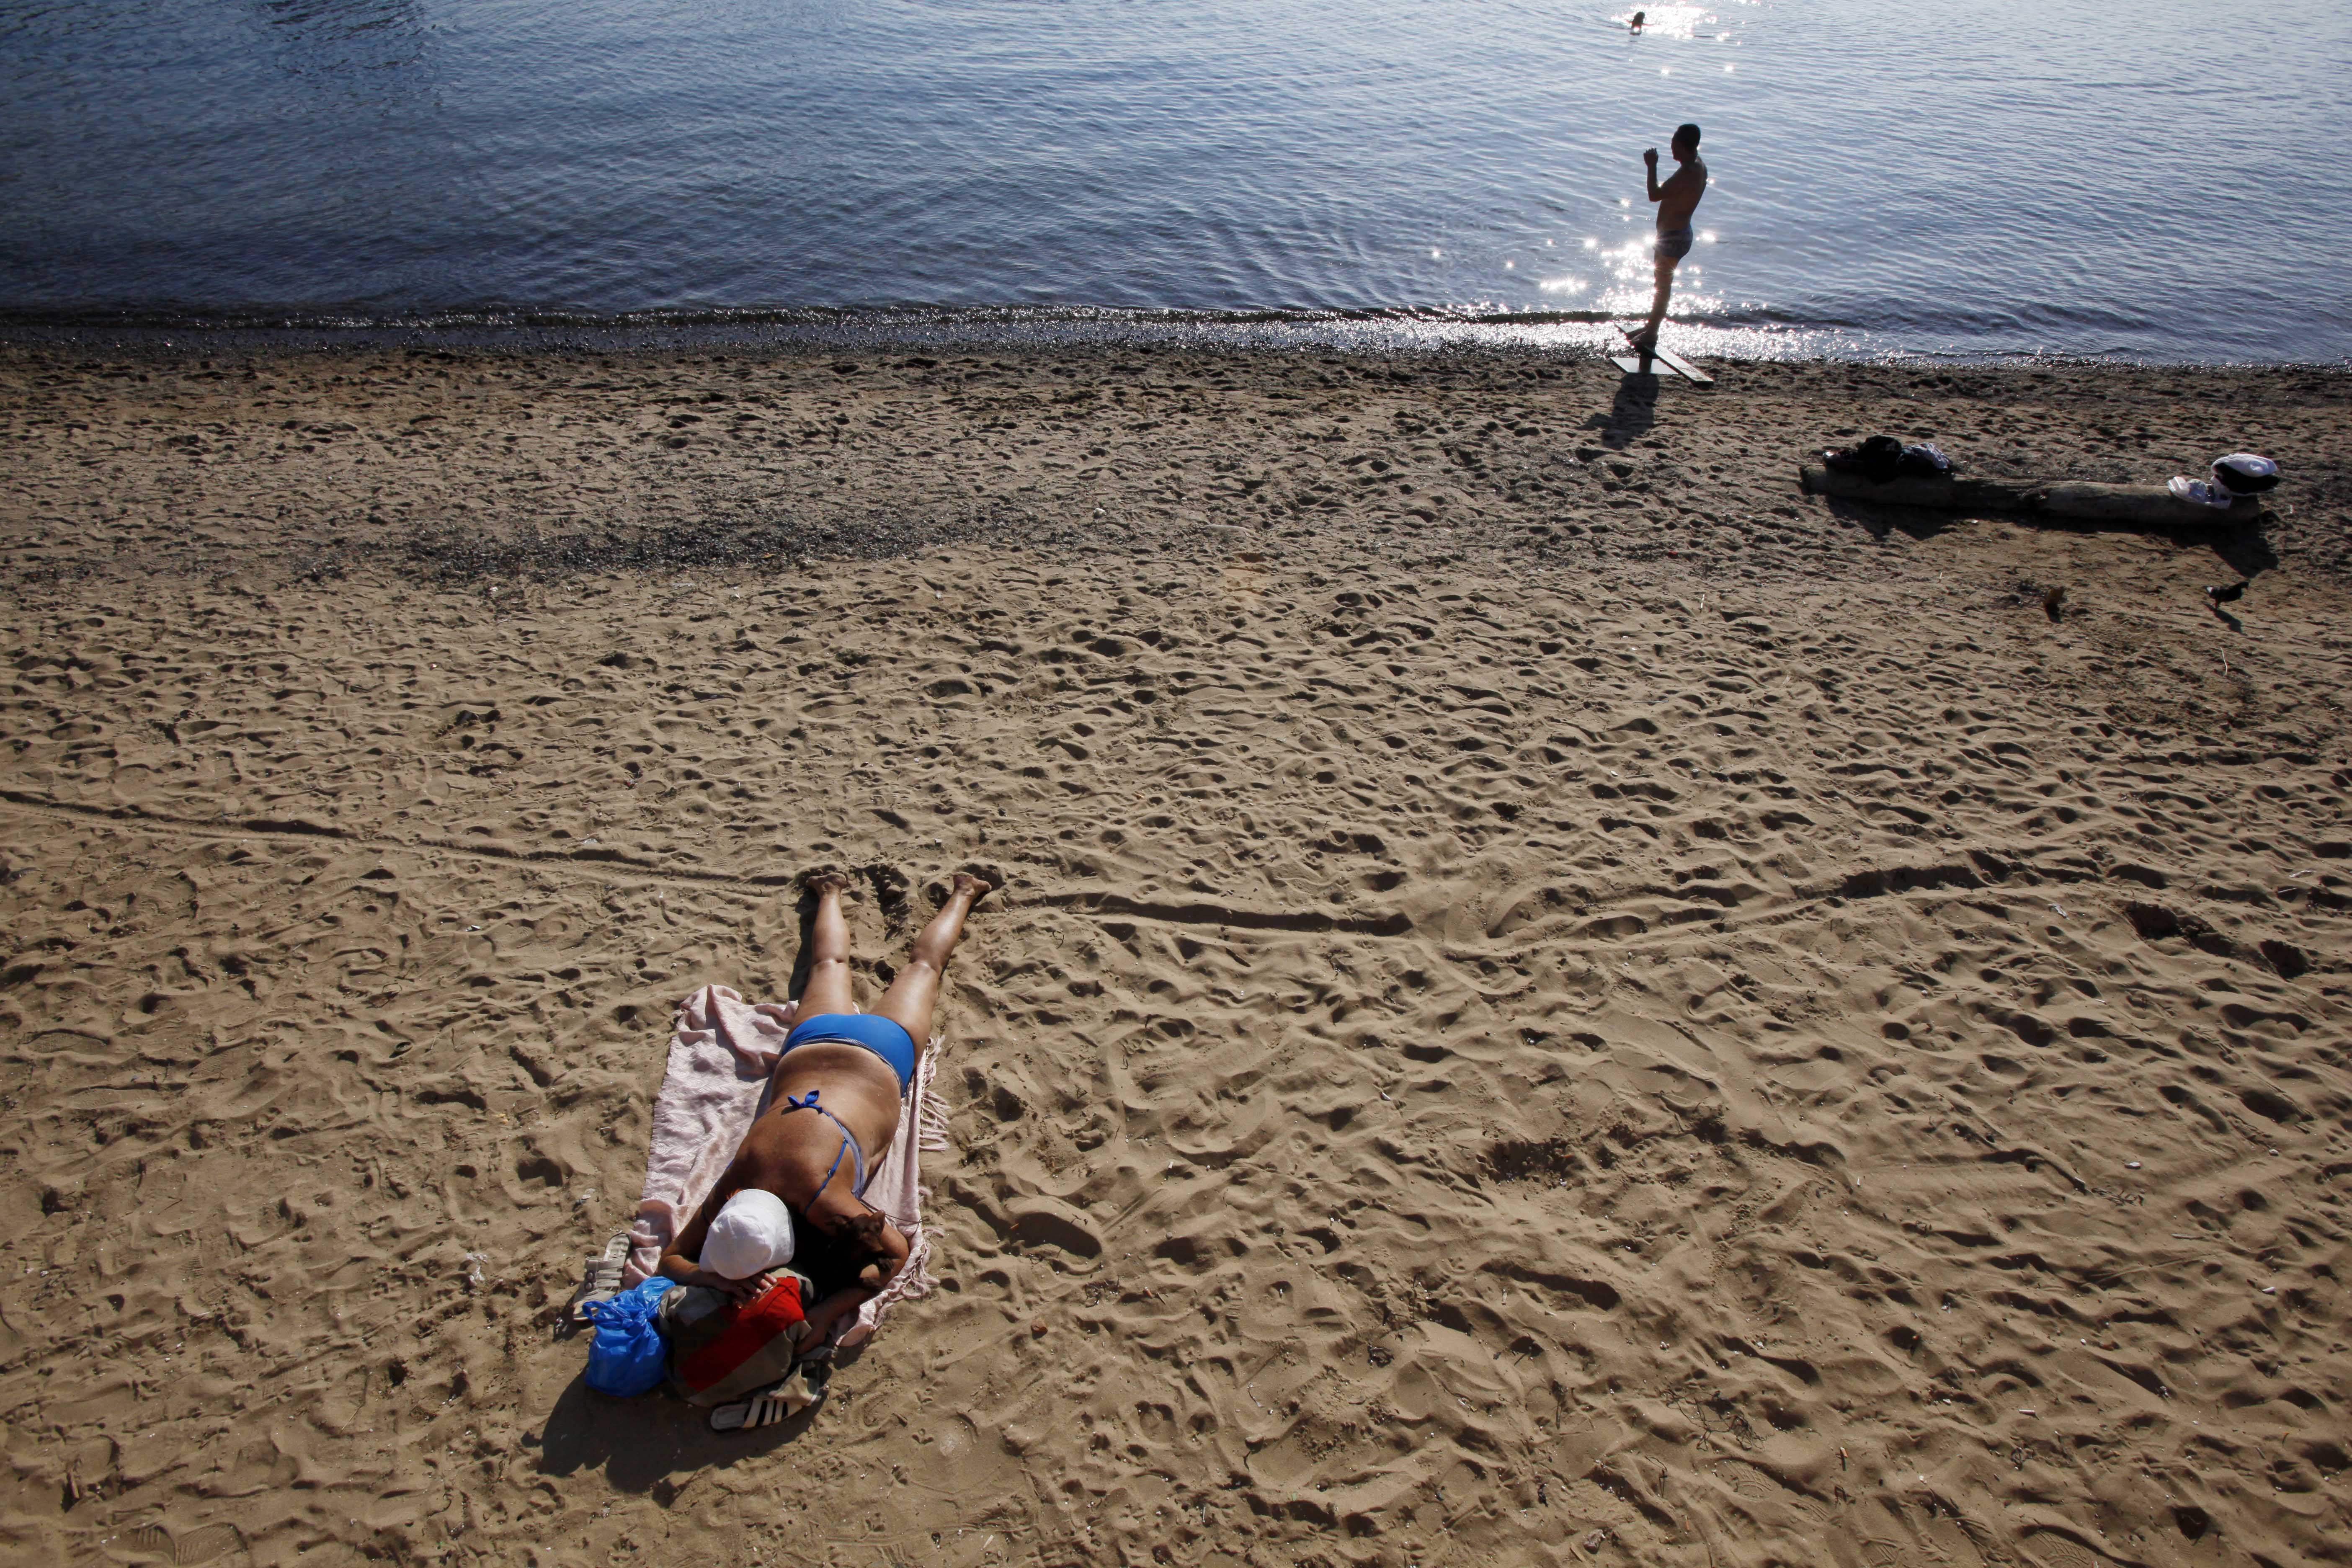 A woman sunbathes on a beach in Vladivostok, Russia, Monday, Sept. 10, 2012. (AP Photo/Greg Baker)